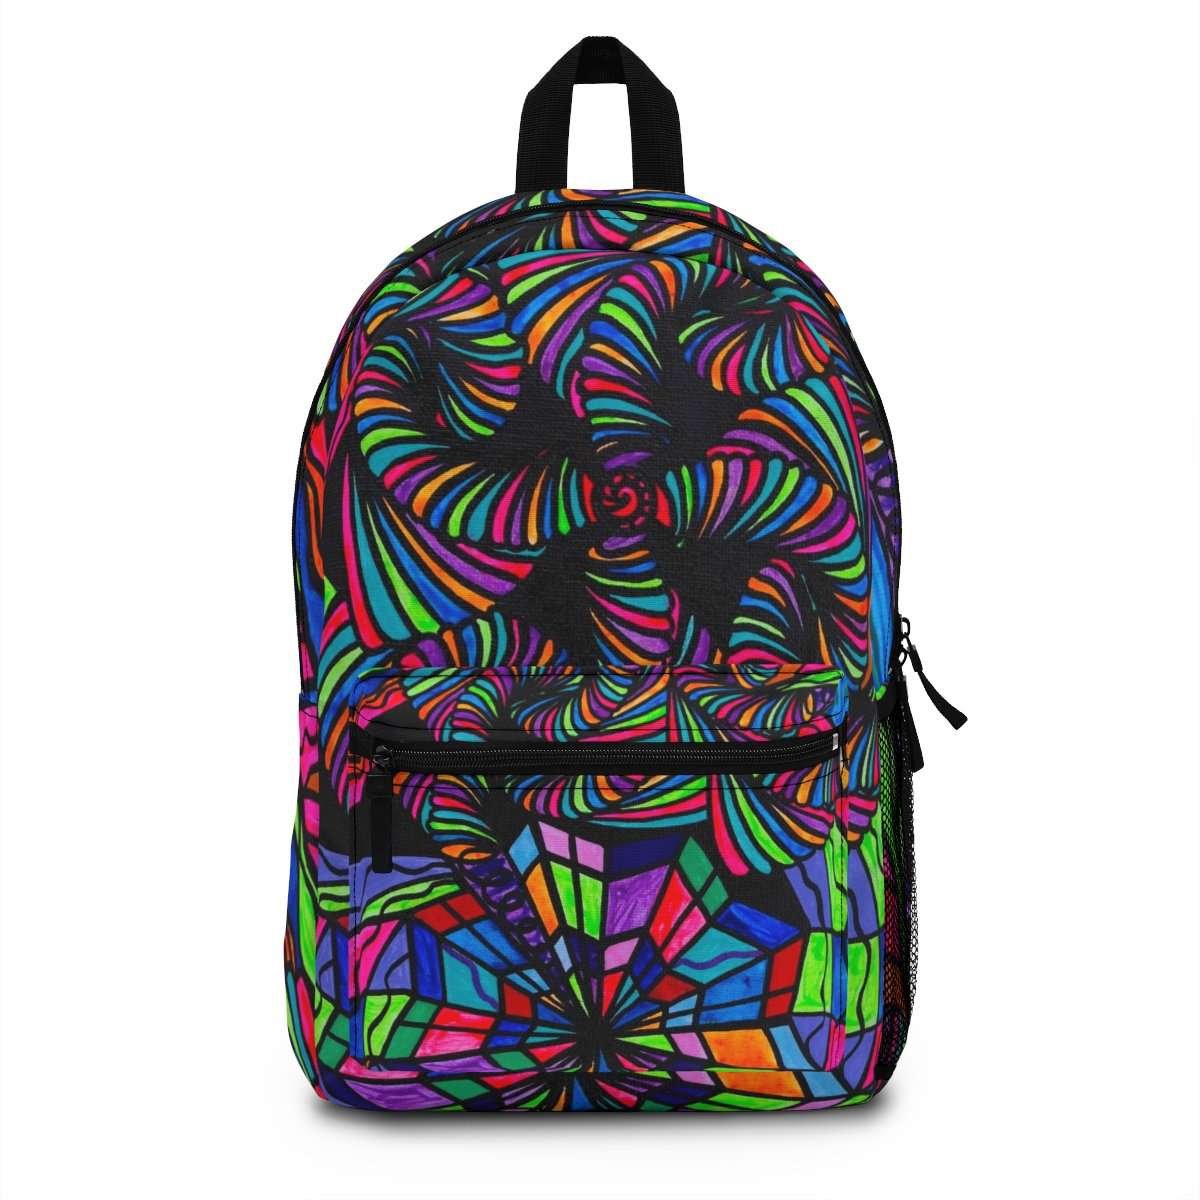 make-your-order-official-of-burgeon-aop-backpack-on-sale_0.jpg